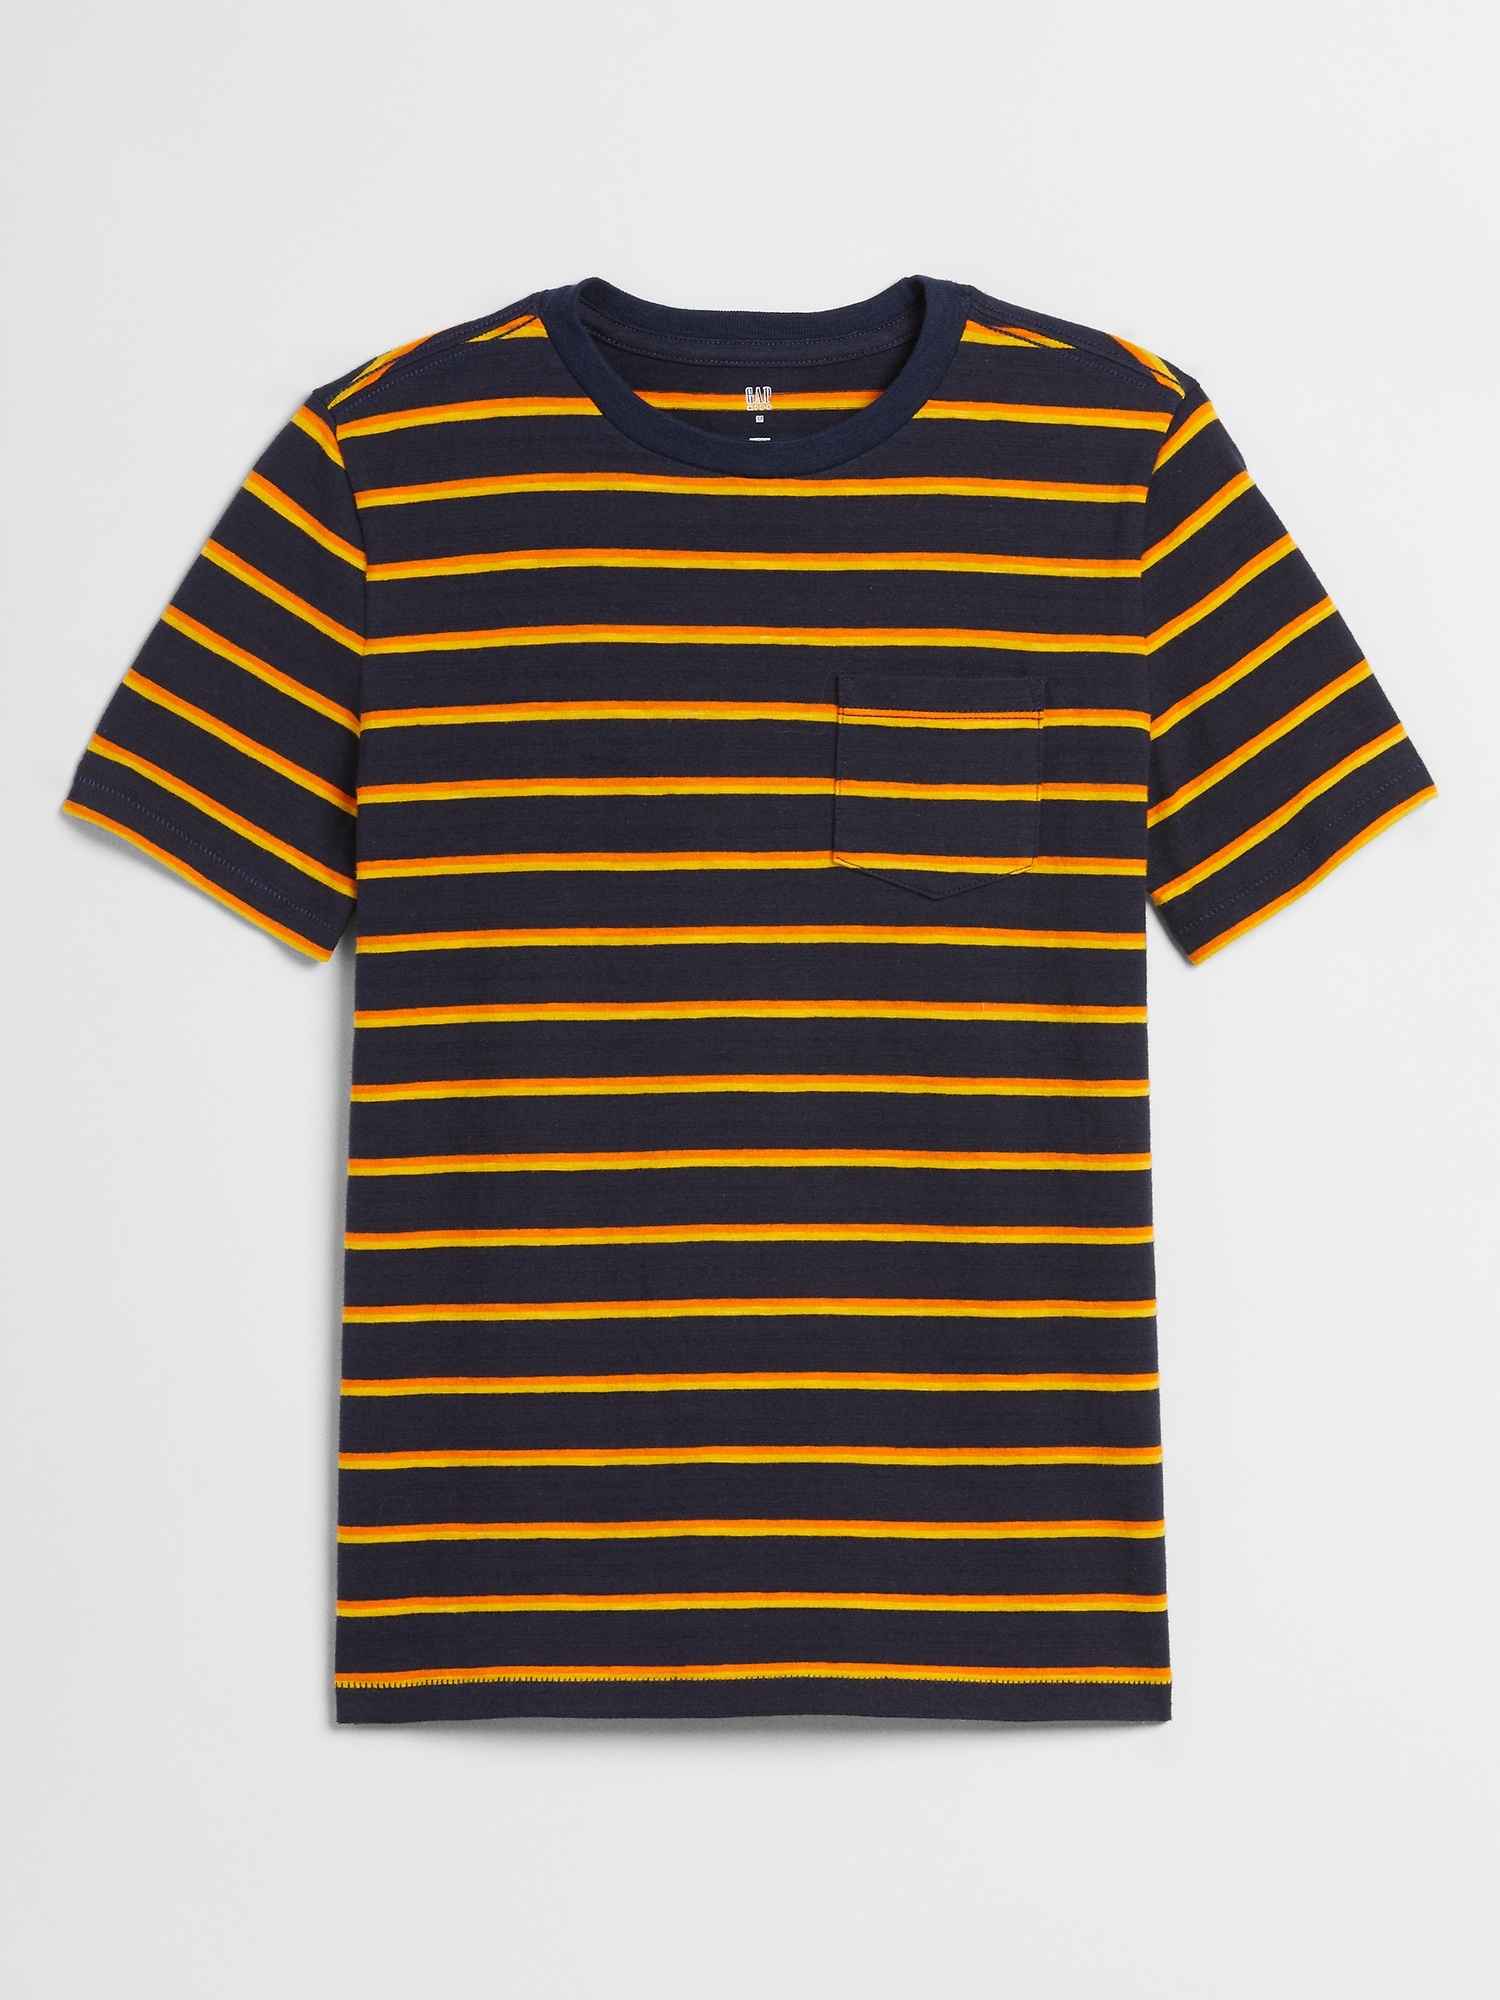 Kids Stripe T-Shirt | Gap Factory